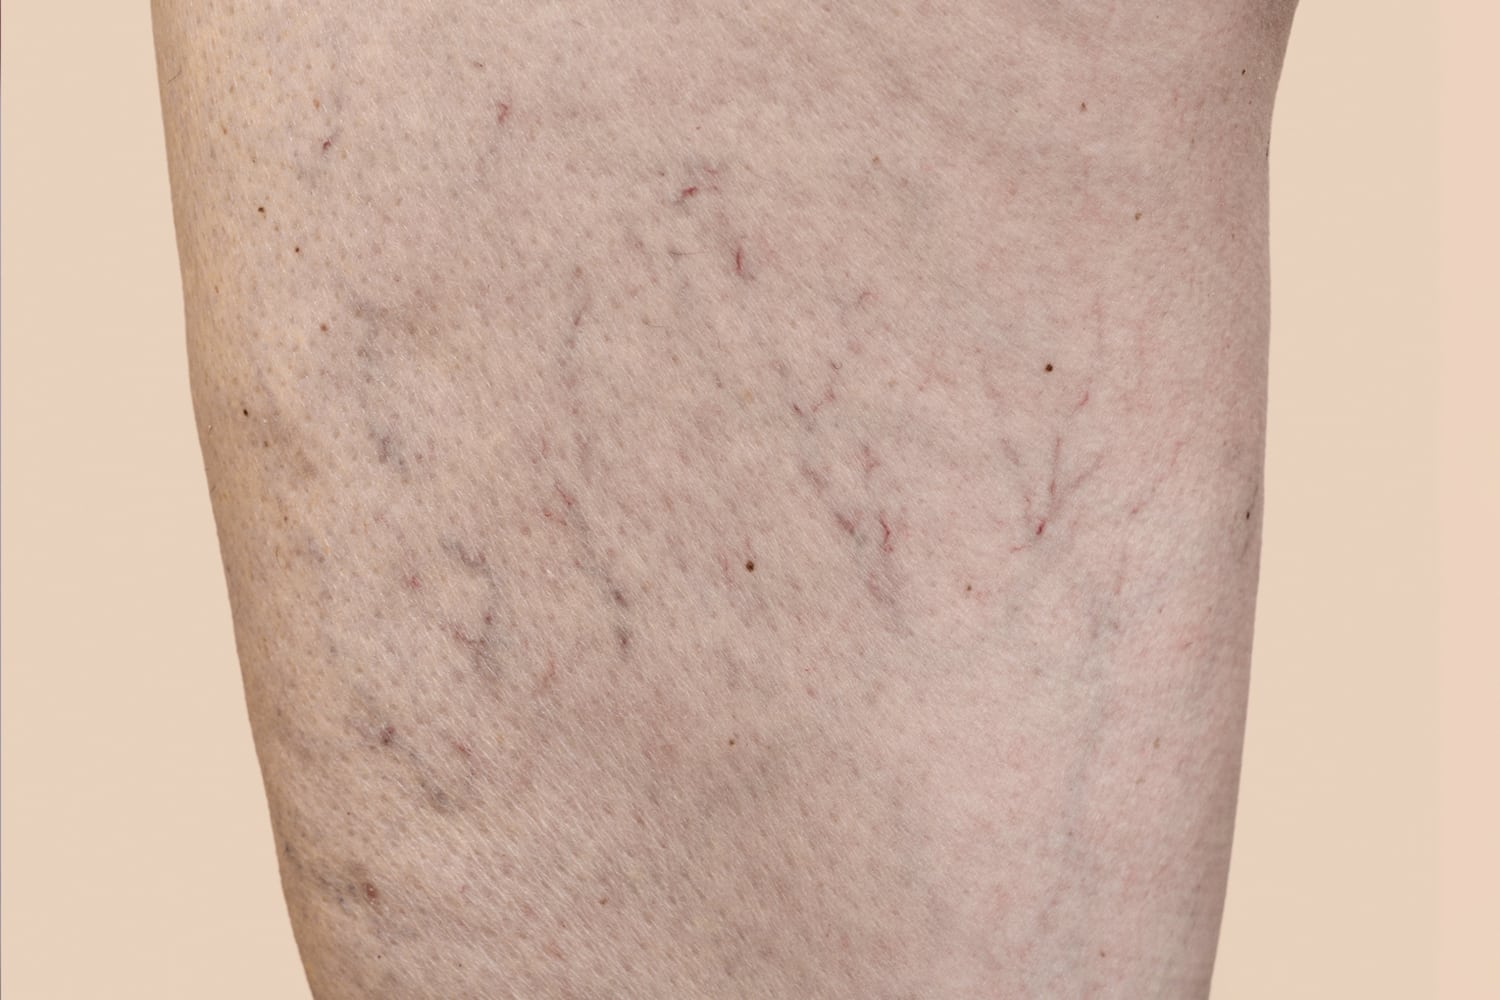 A client's leg with varicose veins prior to laser vein treatment at Regeneris Medspa